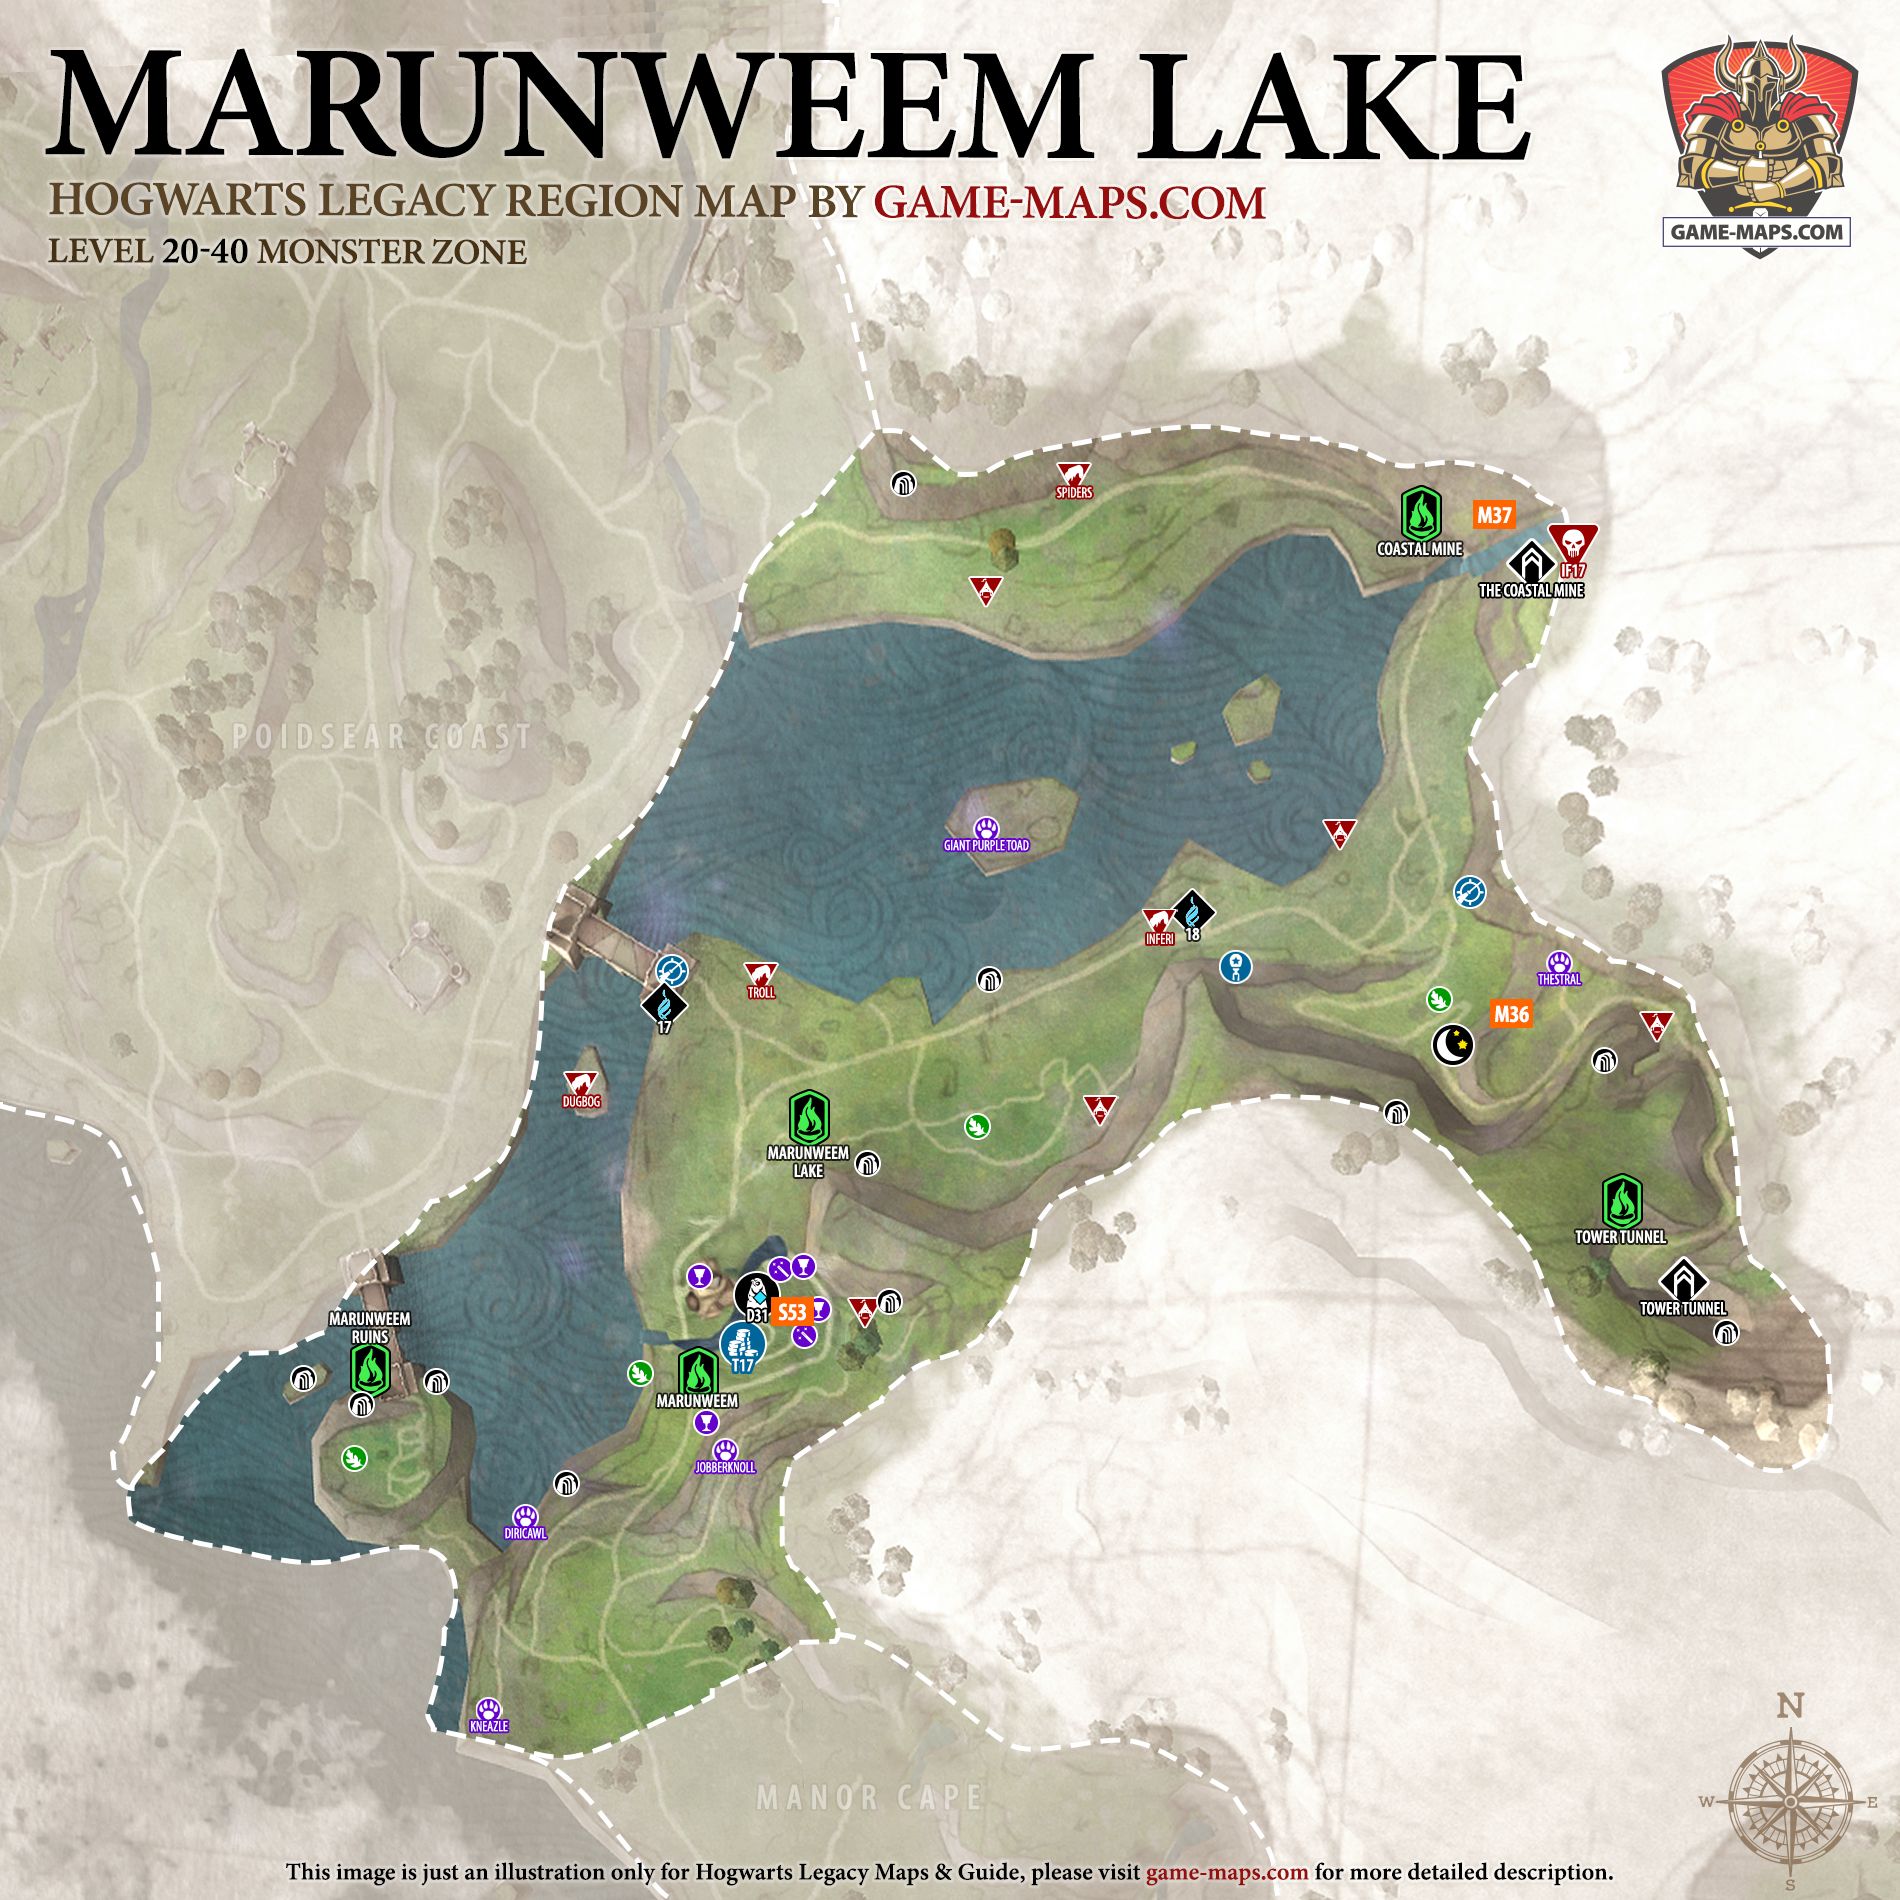 Hogwarts Legacy Map of Marunweem Lake